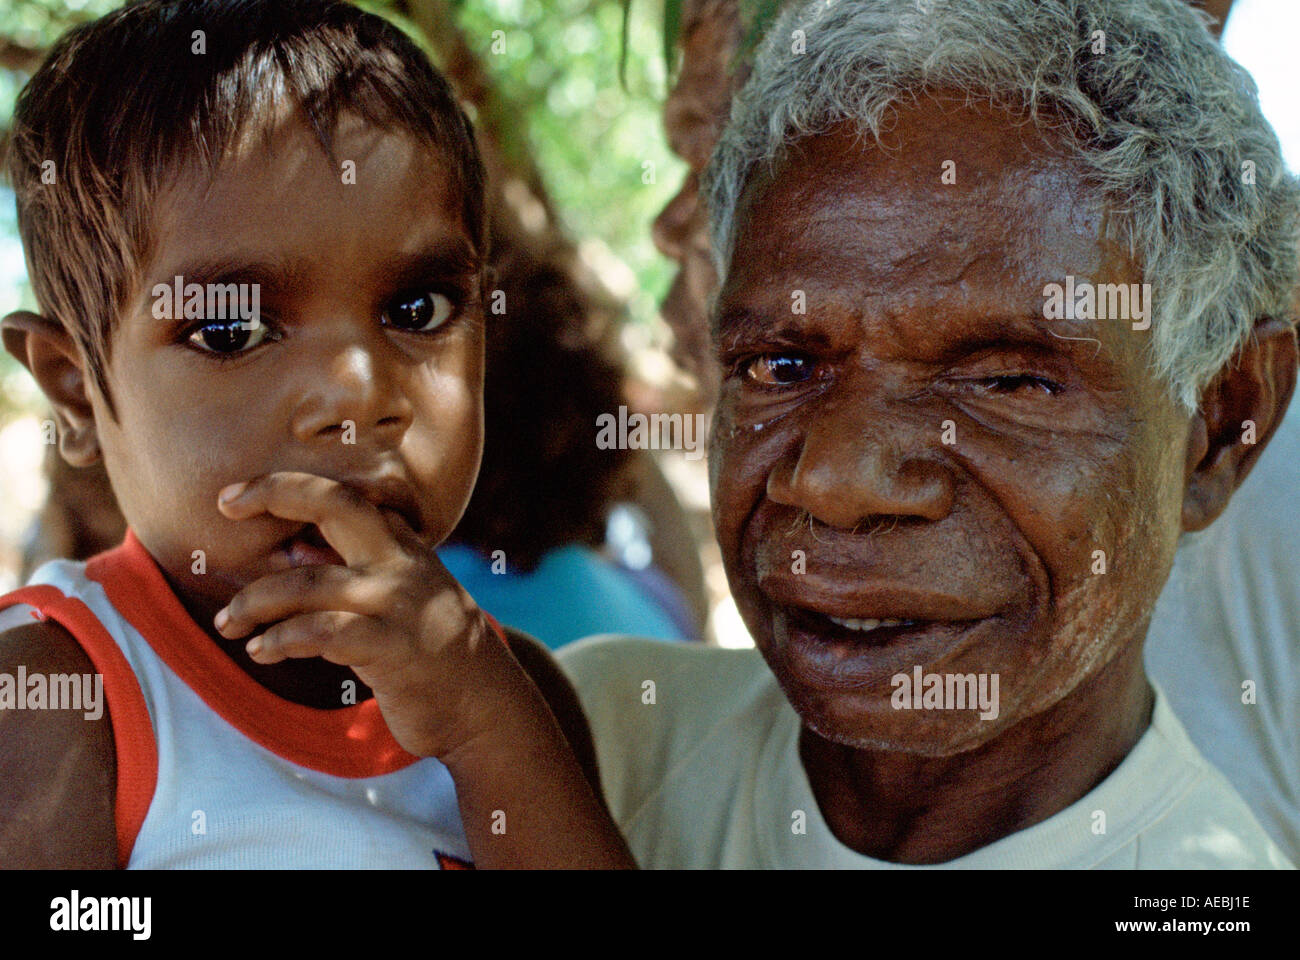 australian-aborigines-possibly-grandfather-and-grandson-AEBJ1E.jpg